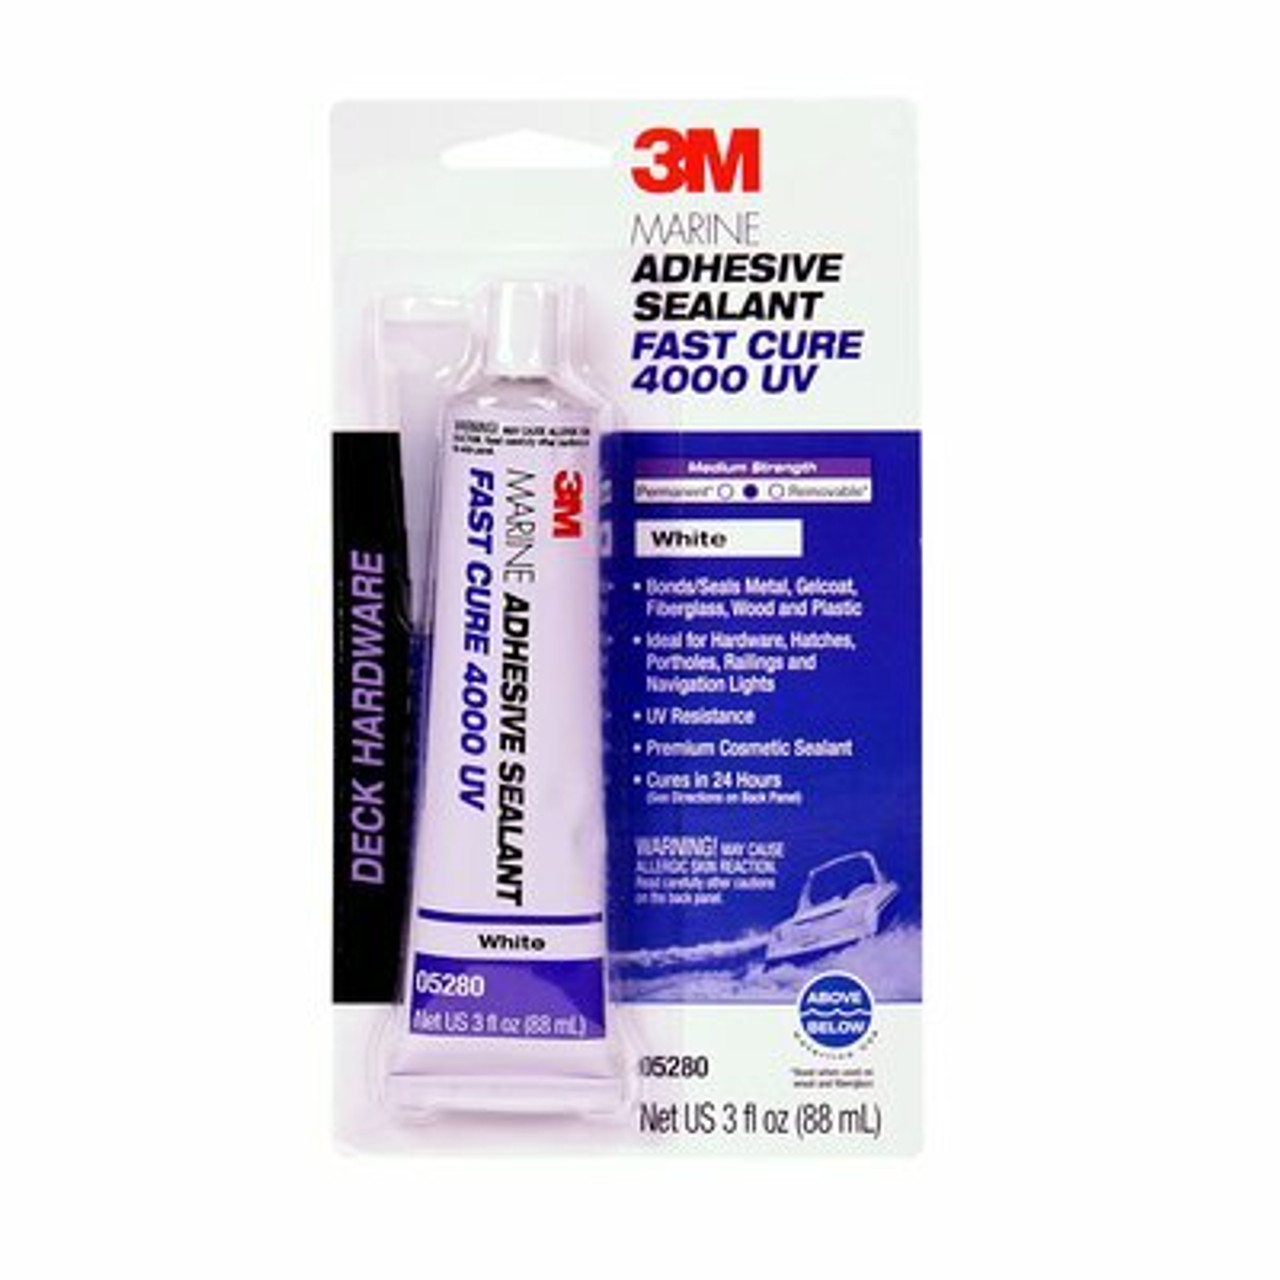 3M™ Marine Adhesive Sealant 4000 UV, Black, 3 oz Tube